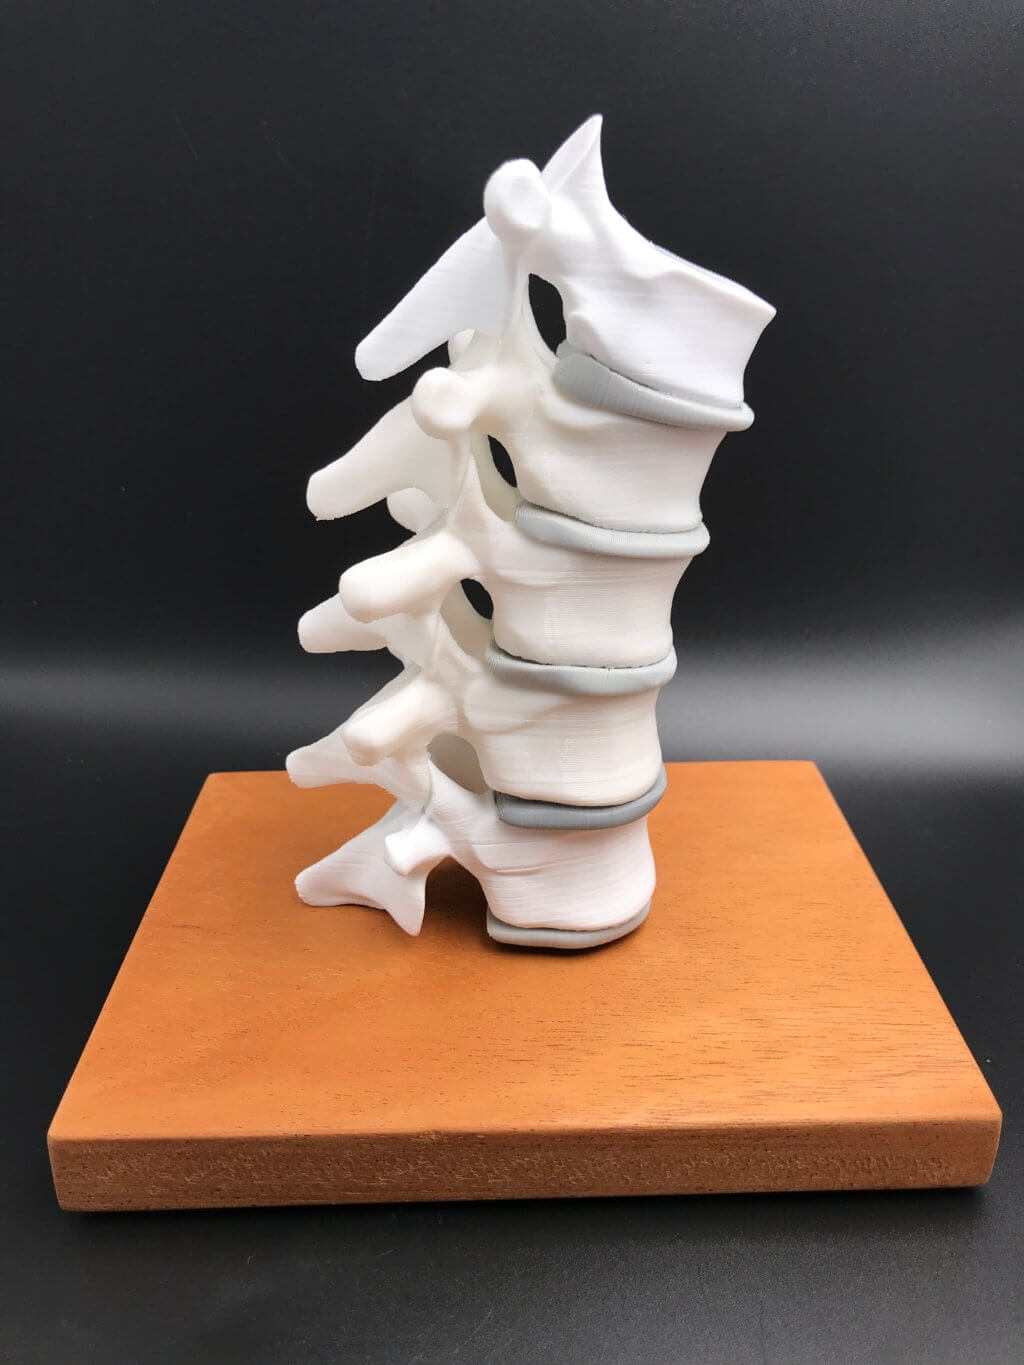 3D printed spine